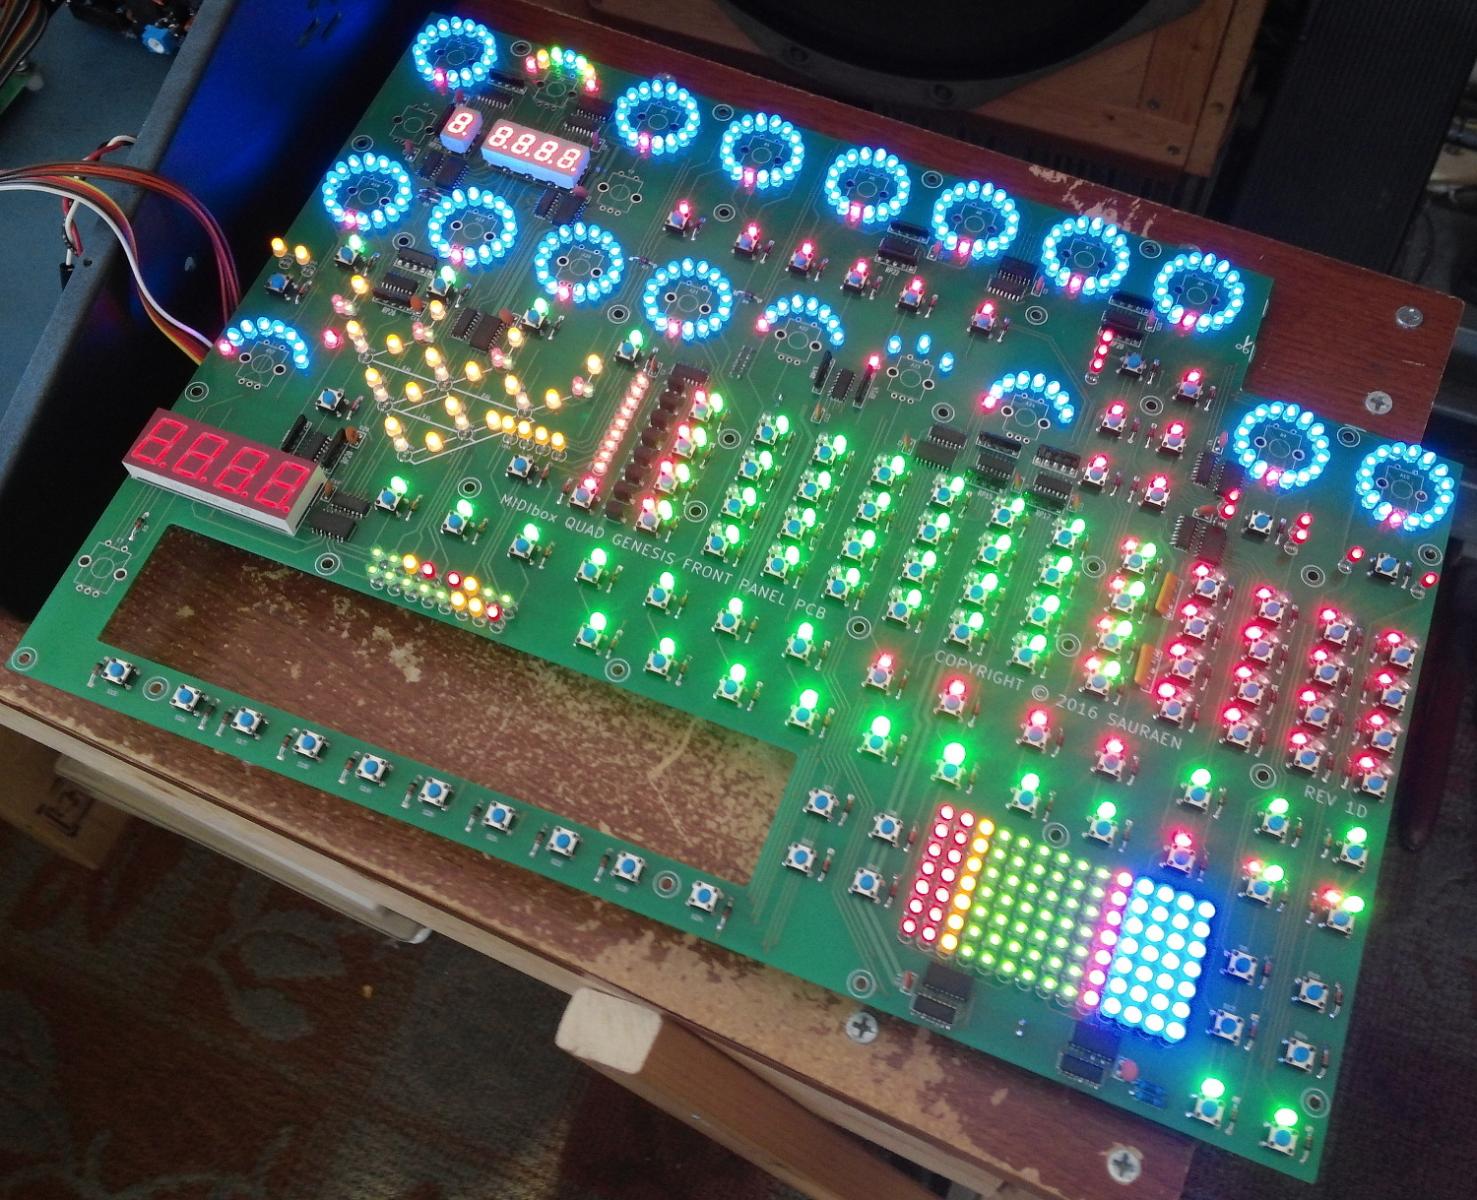 MIDIbox Quad Genesis Front Panel (MBQG_FP) PCB: Most LEDs On